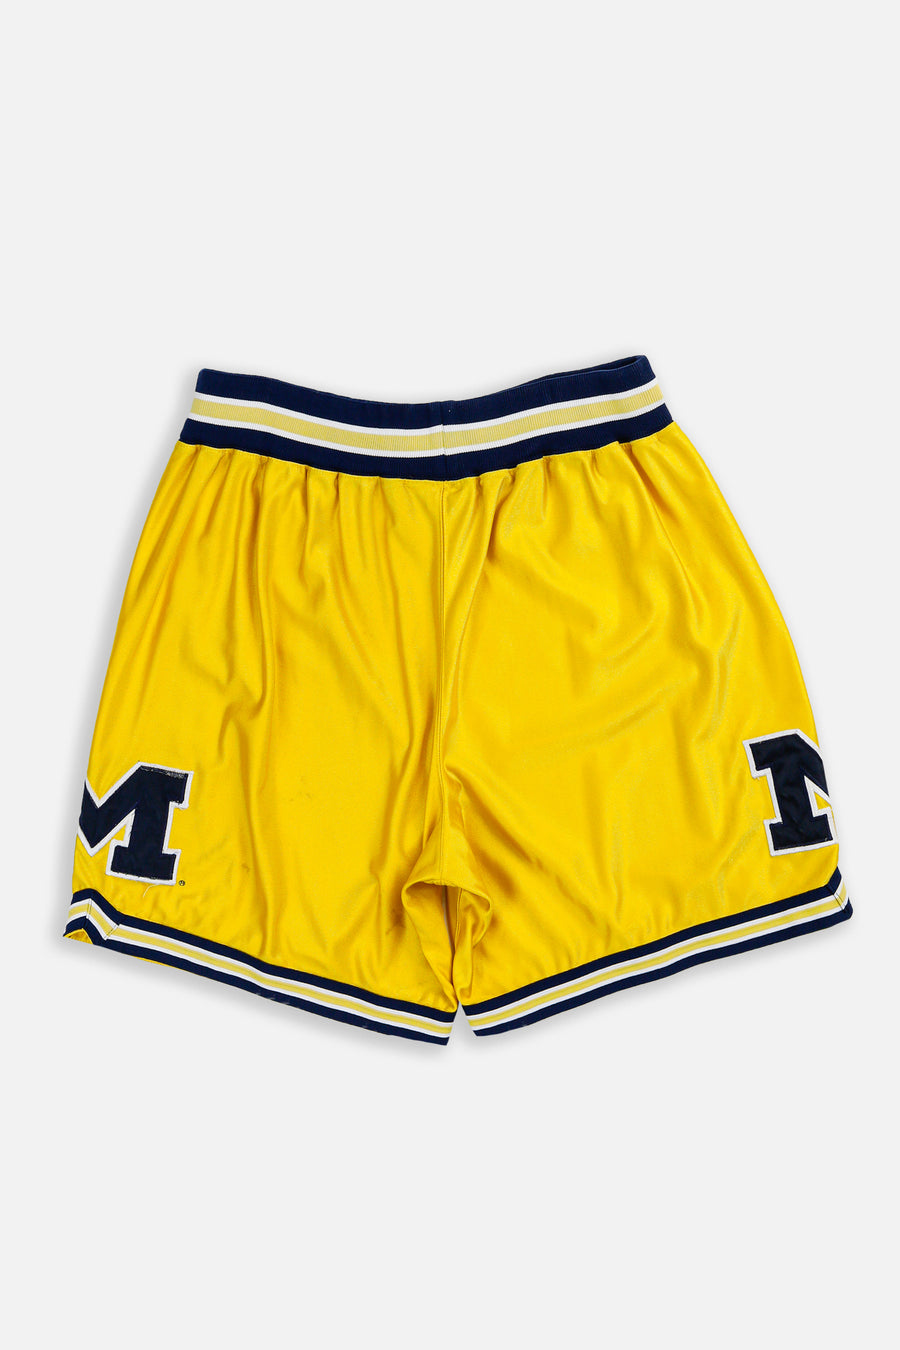 Vintage Michigan Nike Basketball Shorts - L